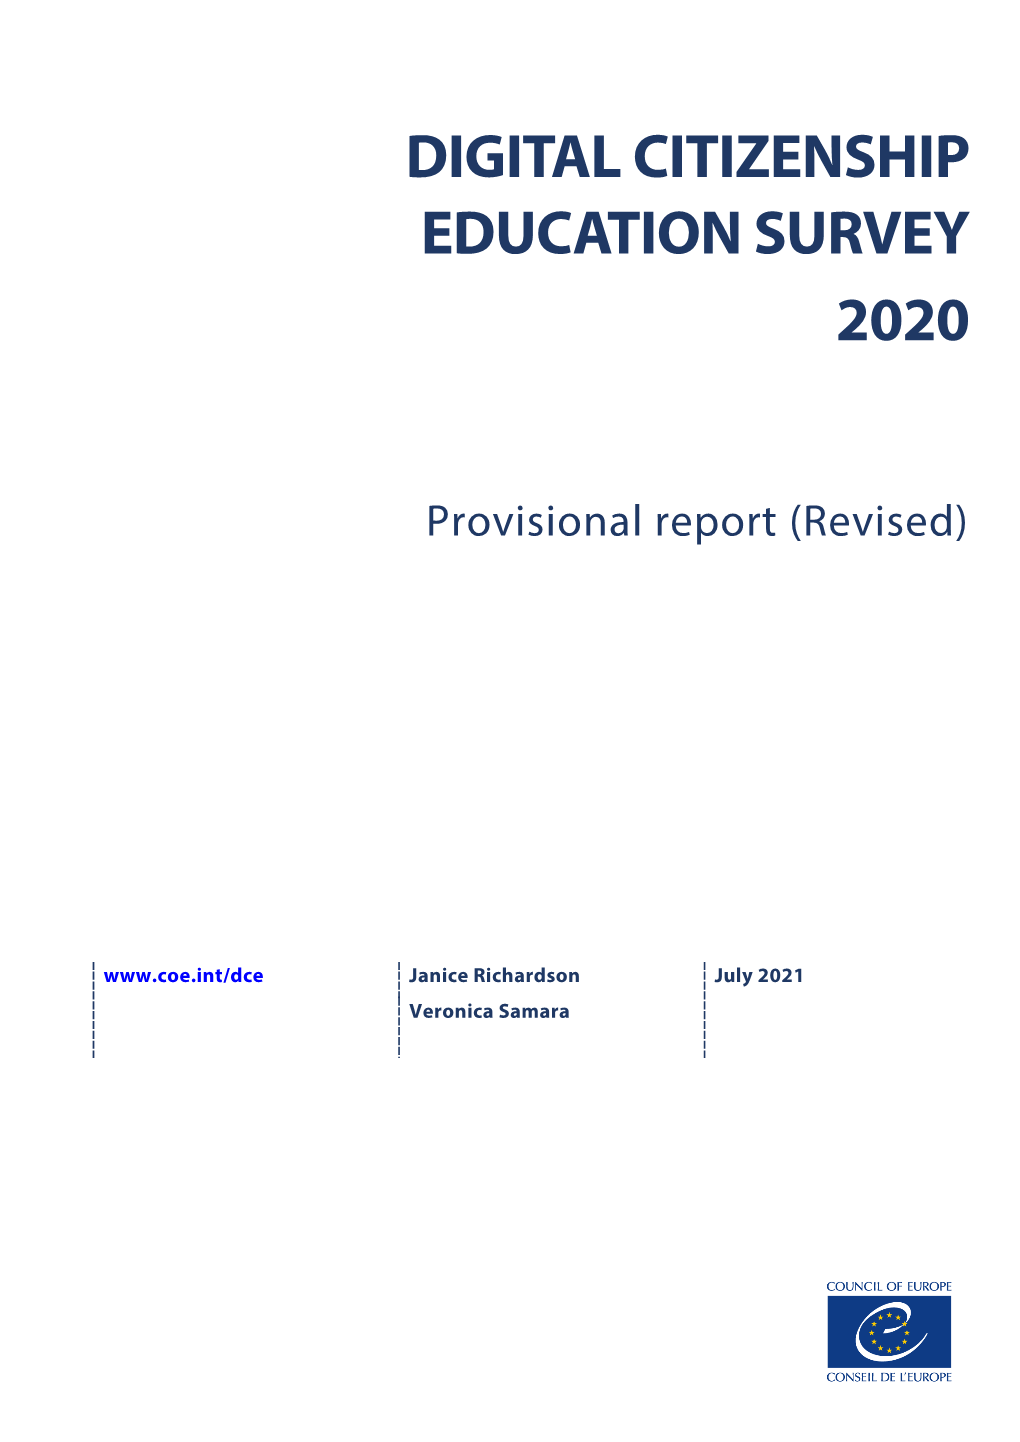 Digital Citizenship Education Survey 2020